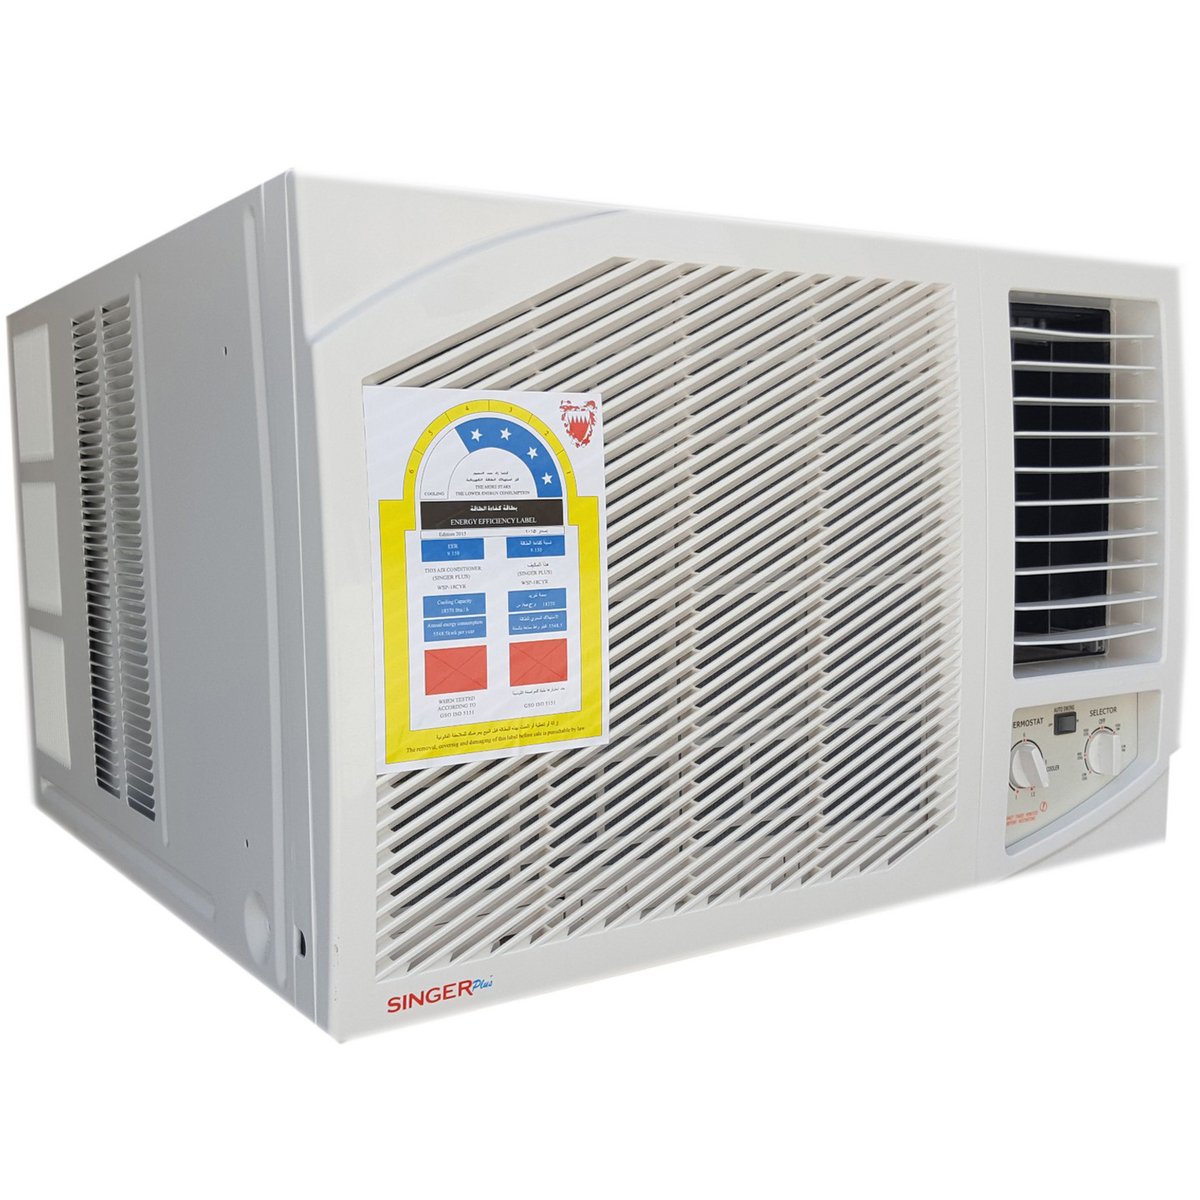 Singer Window Air Conditioner WSP18CM 1.5Ton